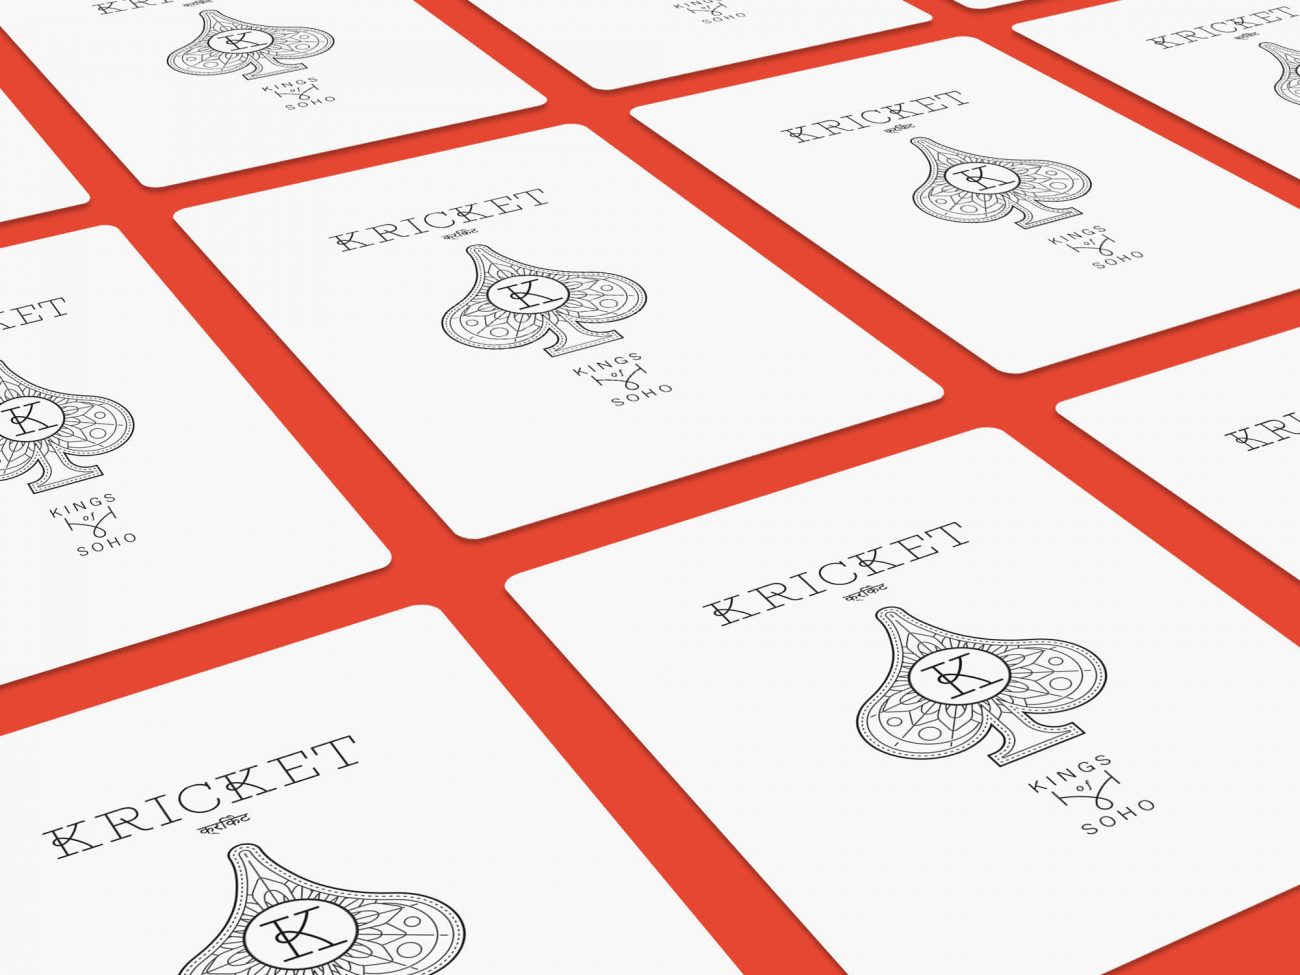 kricket-spade-cards3